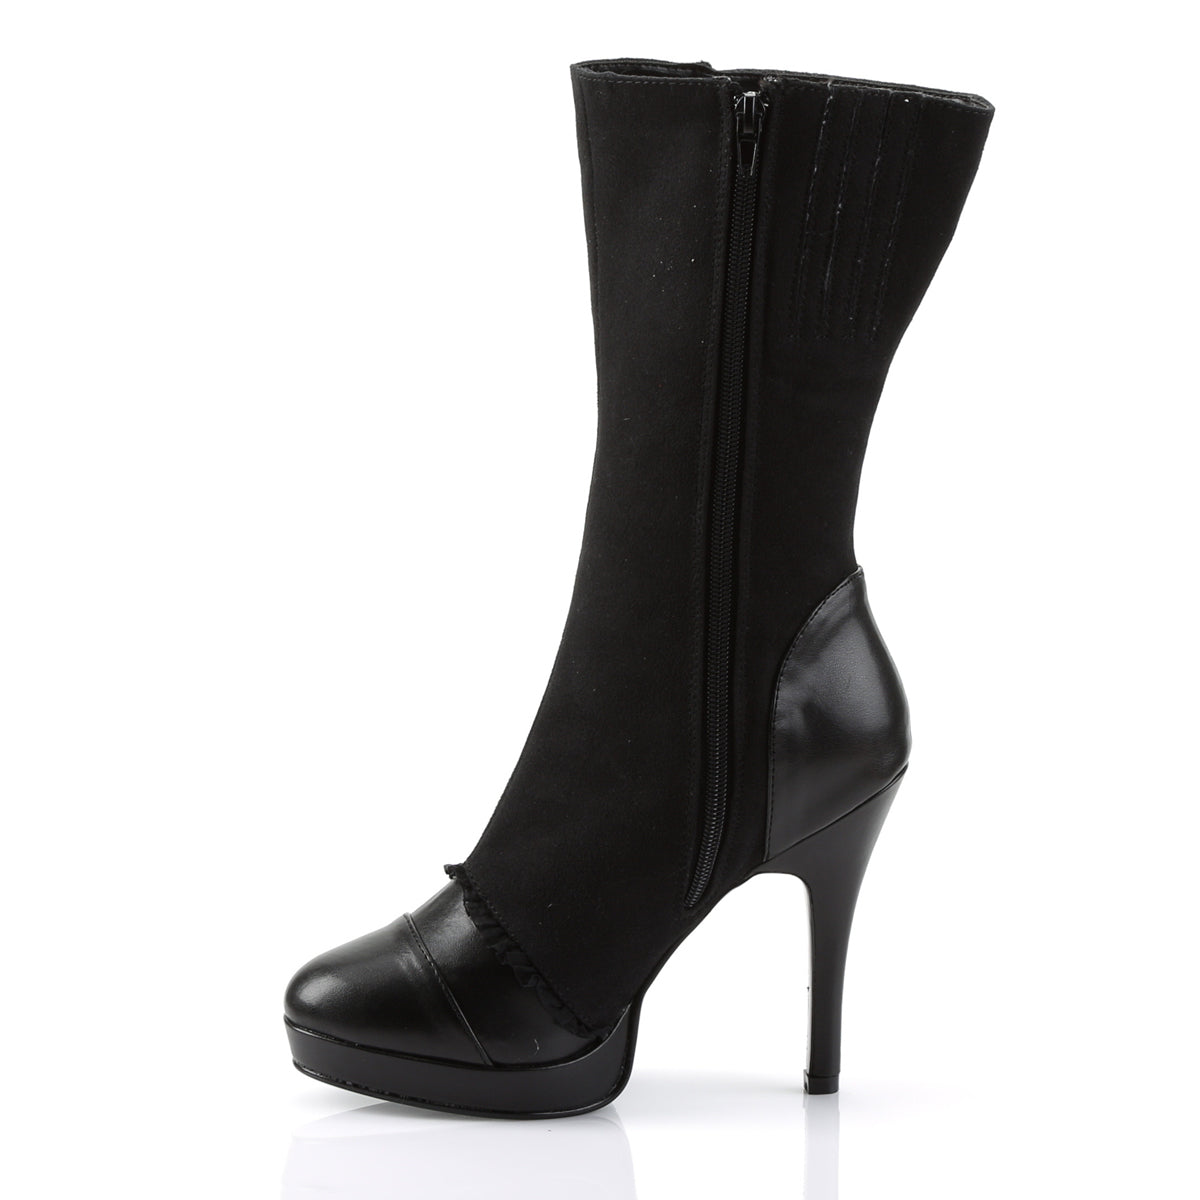 SPLENDOR-130 Retro 4.5" Heel Black Microfiber Women Boots Funtasma Costume Shoes 